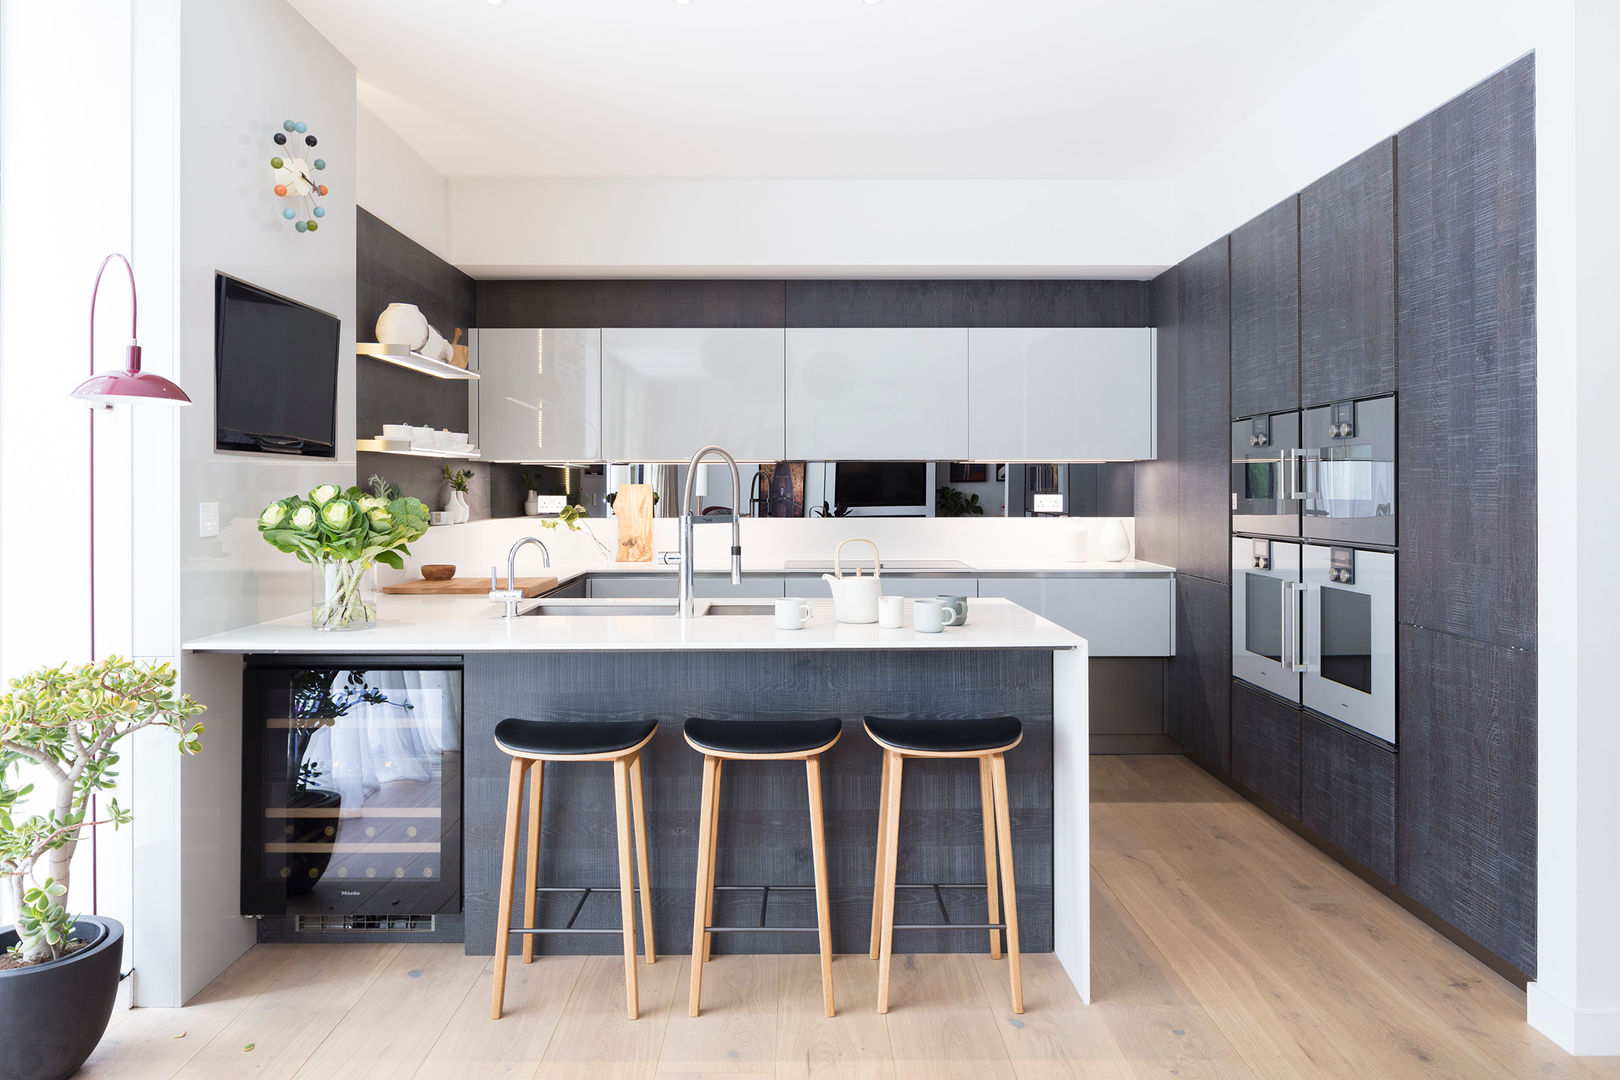 Modern New Home in Hampstead - kitchen bar Black and Milk | Interior Design | London Comedores modernos kitchen bar,kitchen,bar stool,black kitchen